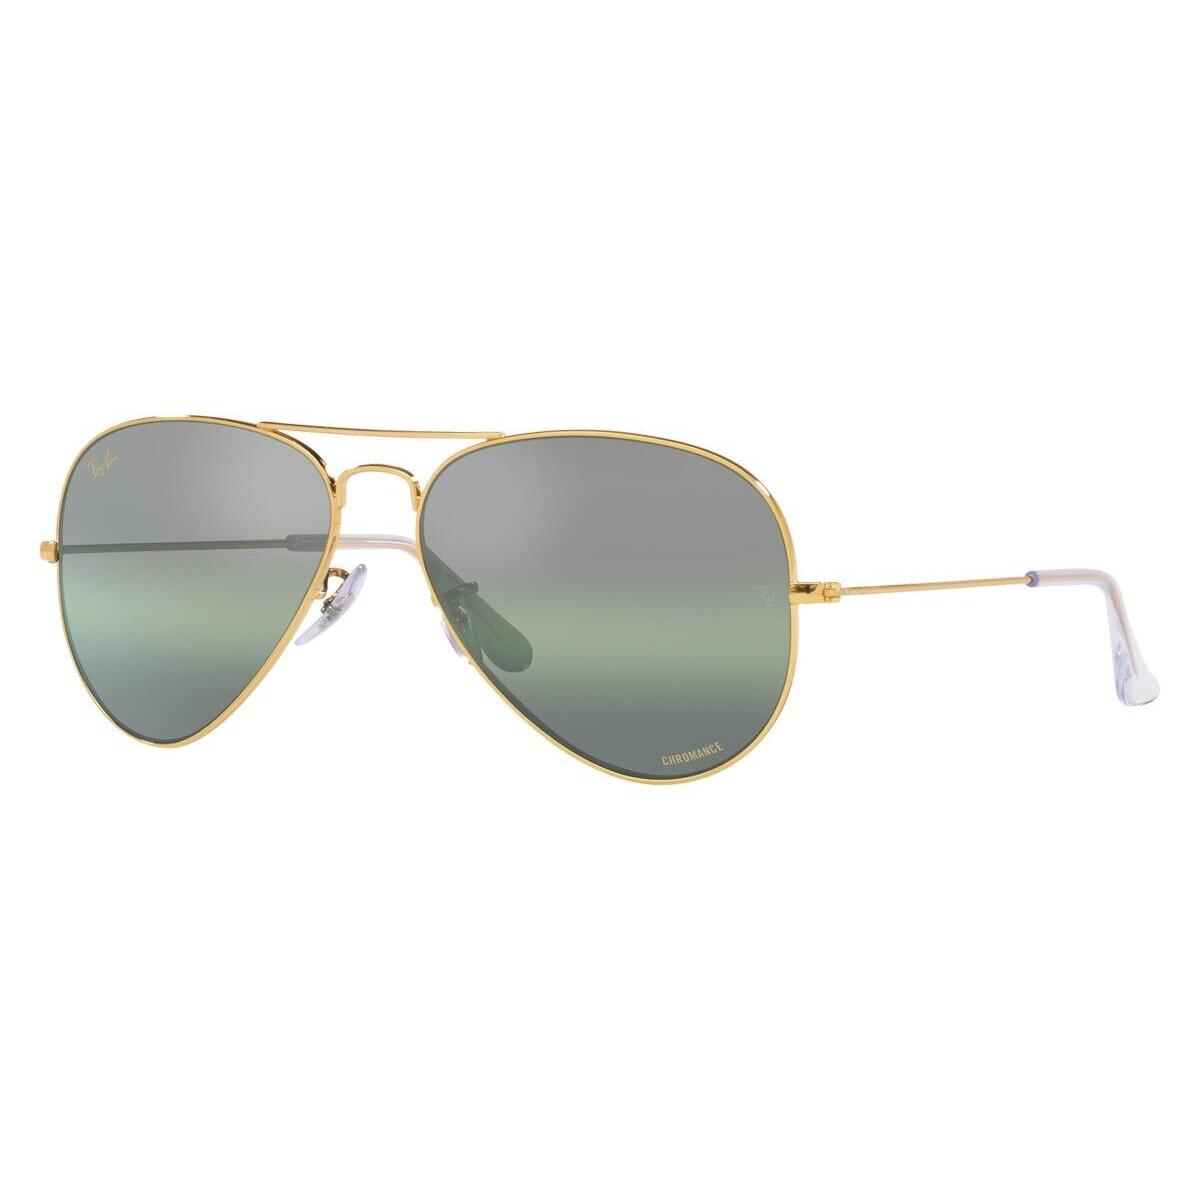 Ray-ban Aviator Large Metal RB3025 Sunglasses Aviator 55mm - Frame: Legend Gold / Gradient Dark Green Mirrored, Lens: Gradient Dark Green Mirrored